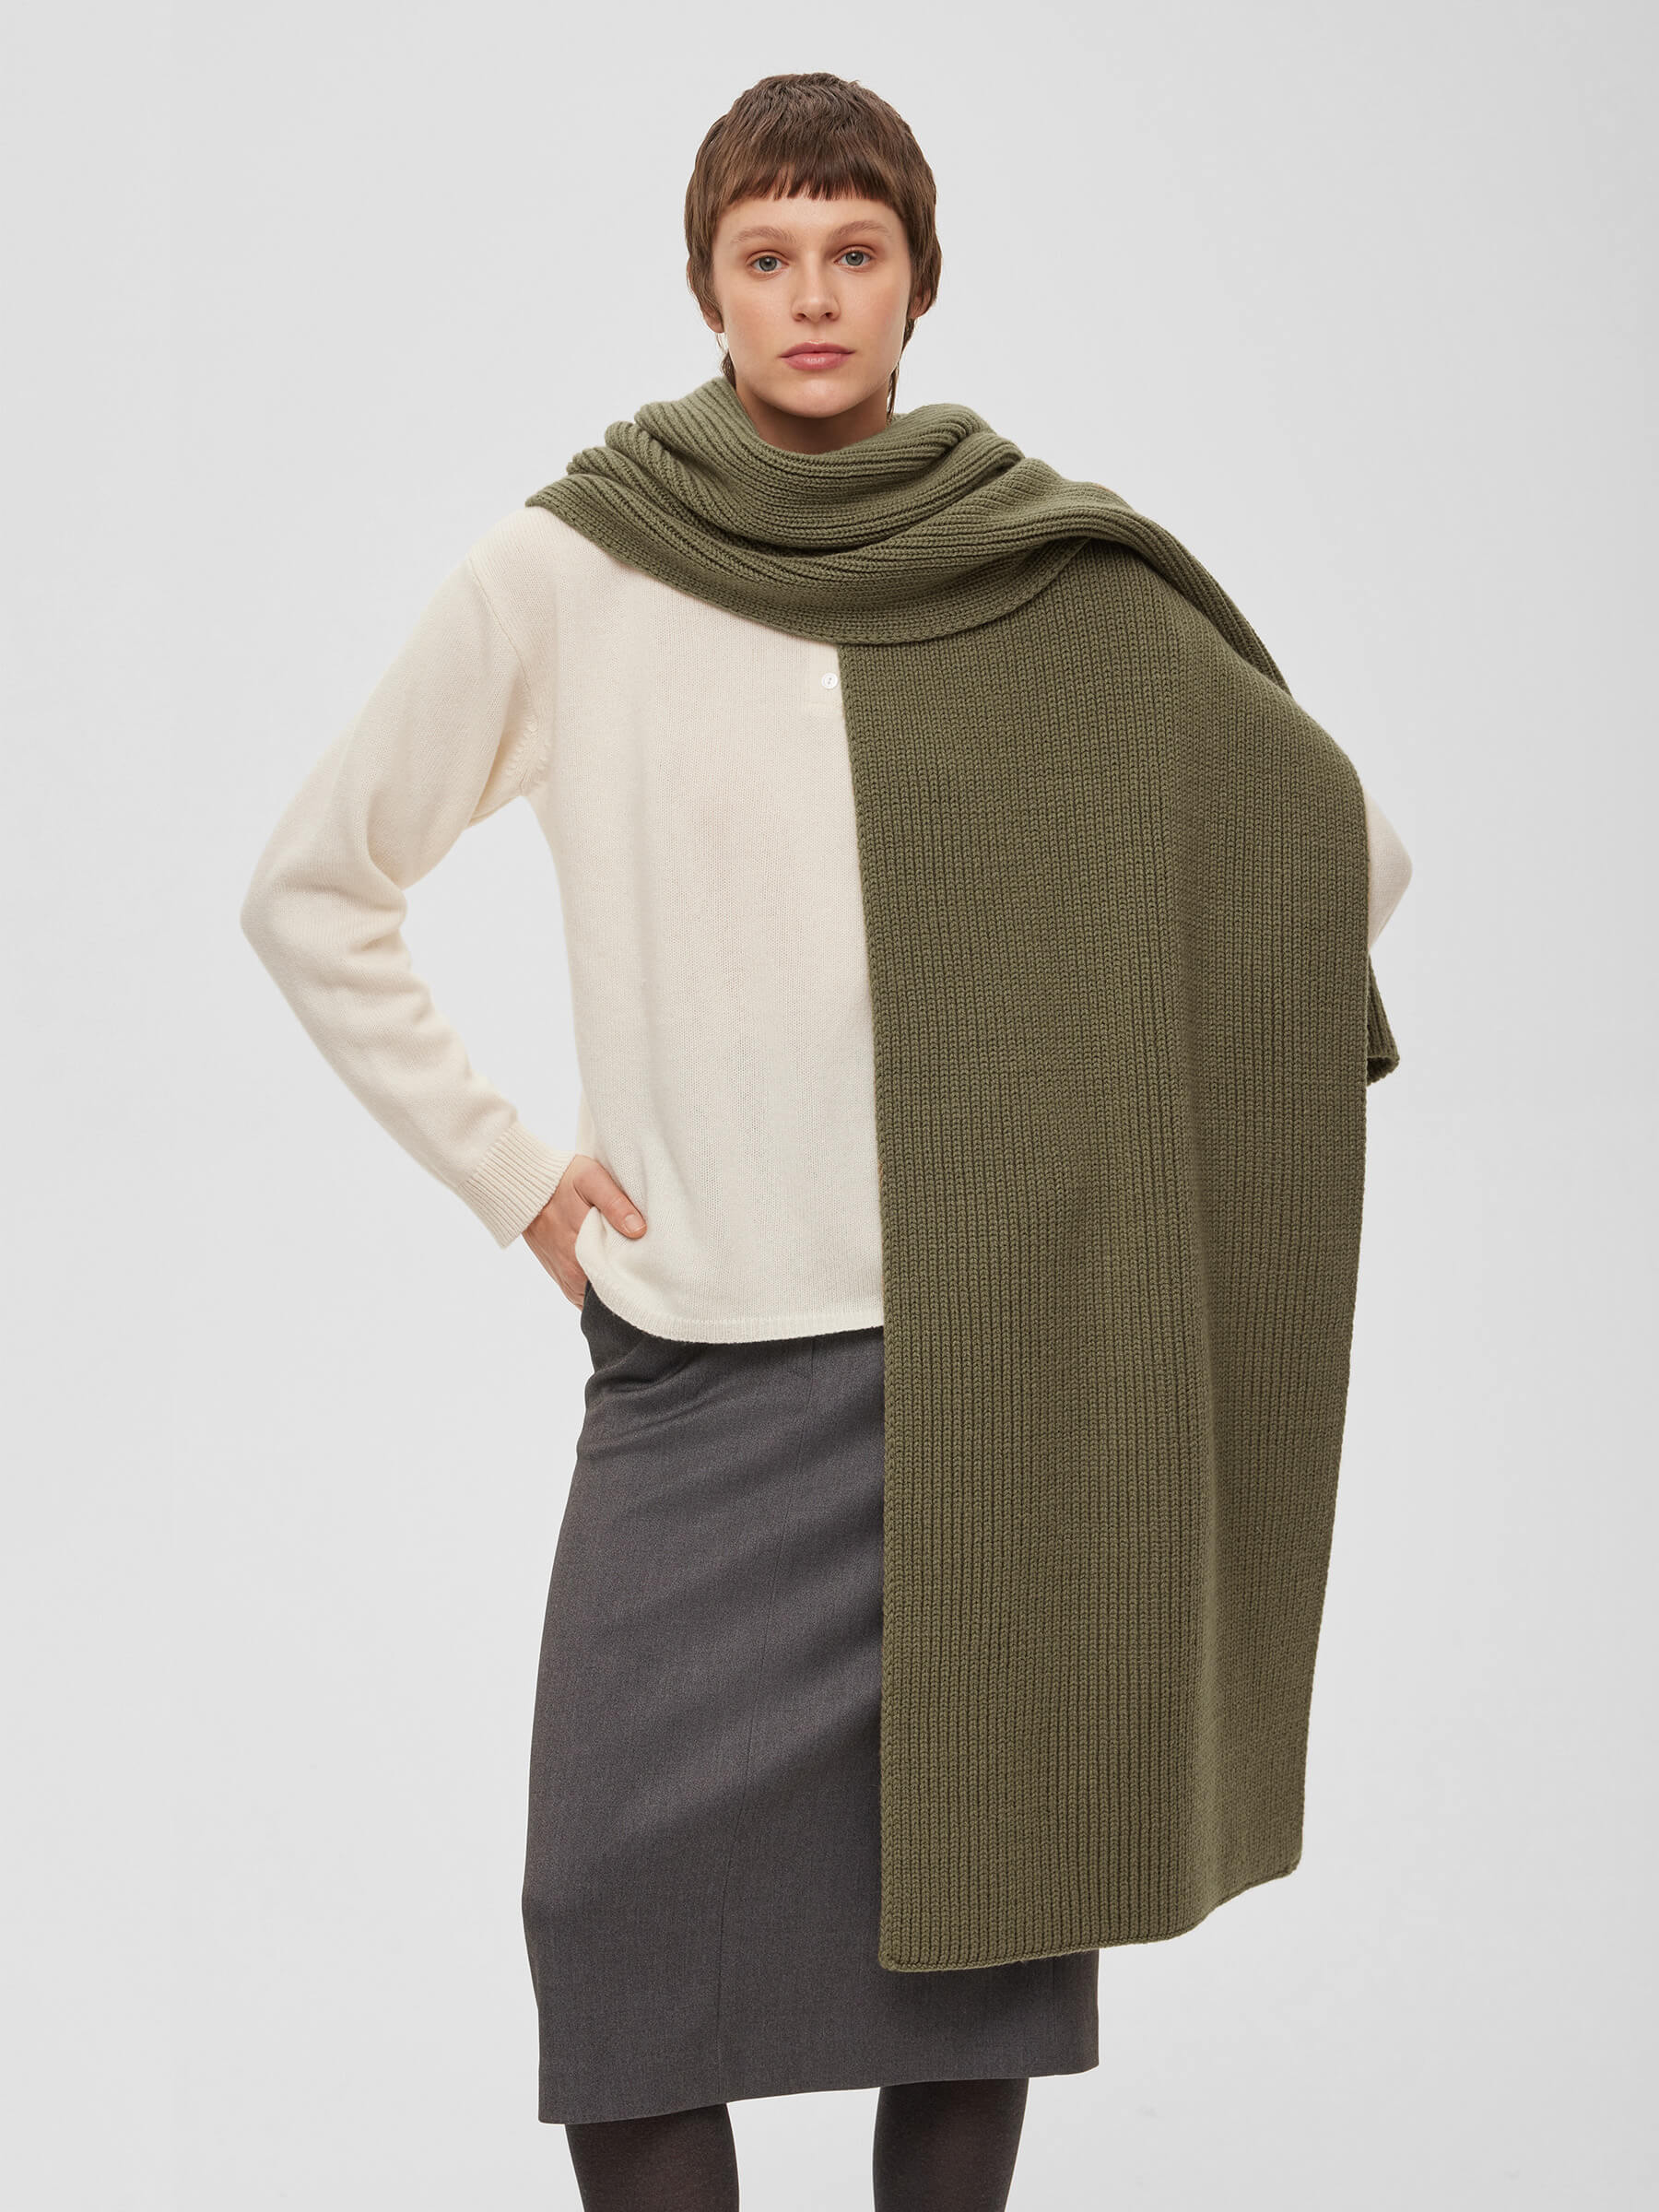 Шарф крупной вязки, цвет – светлый хаки шарф из шерсти мериноса yutti 020 какао o s размер